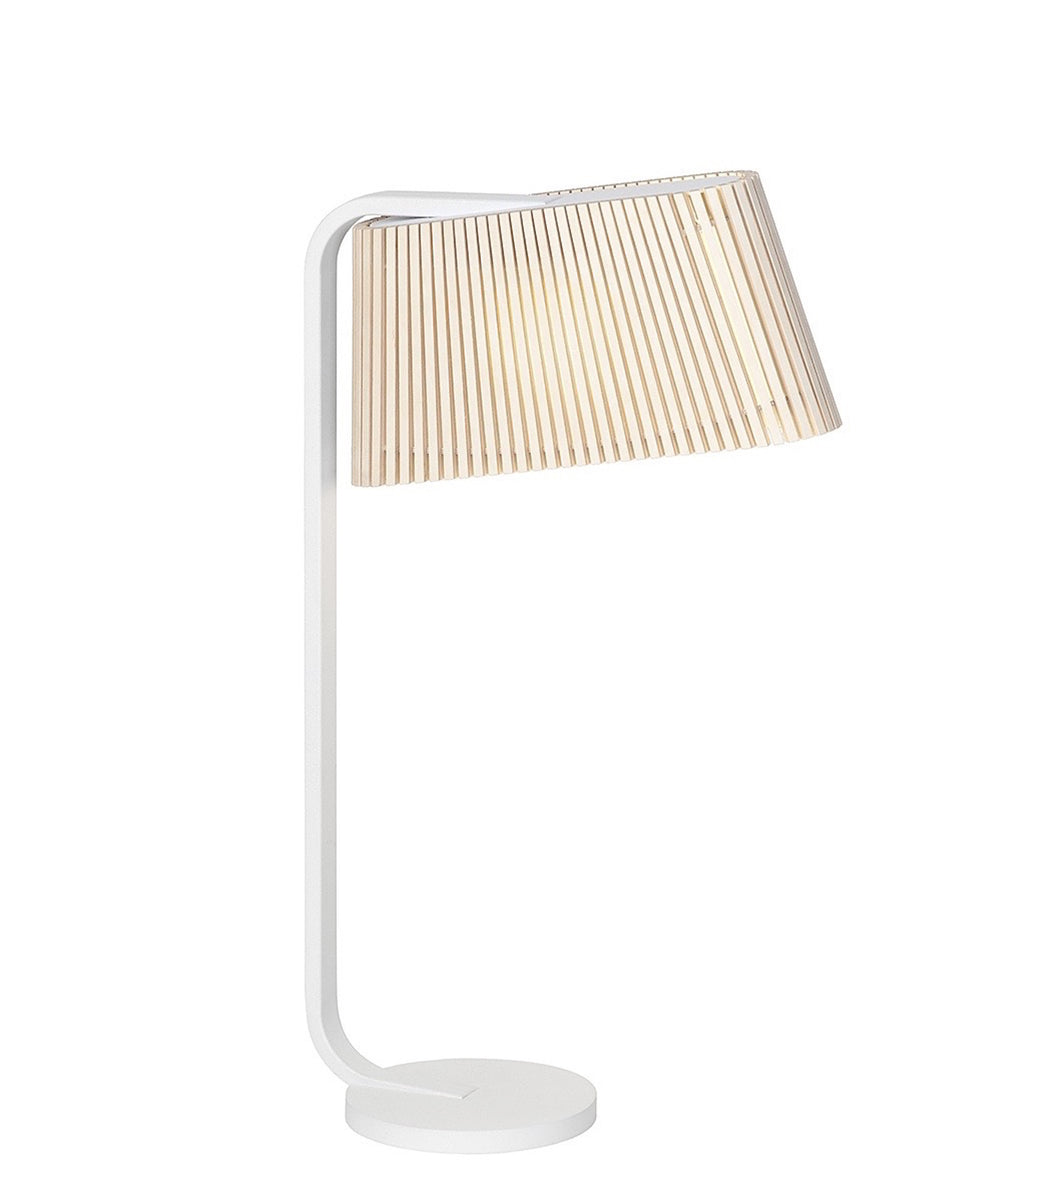 elegant Owalo table light 7020 White LED technology